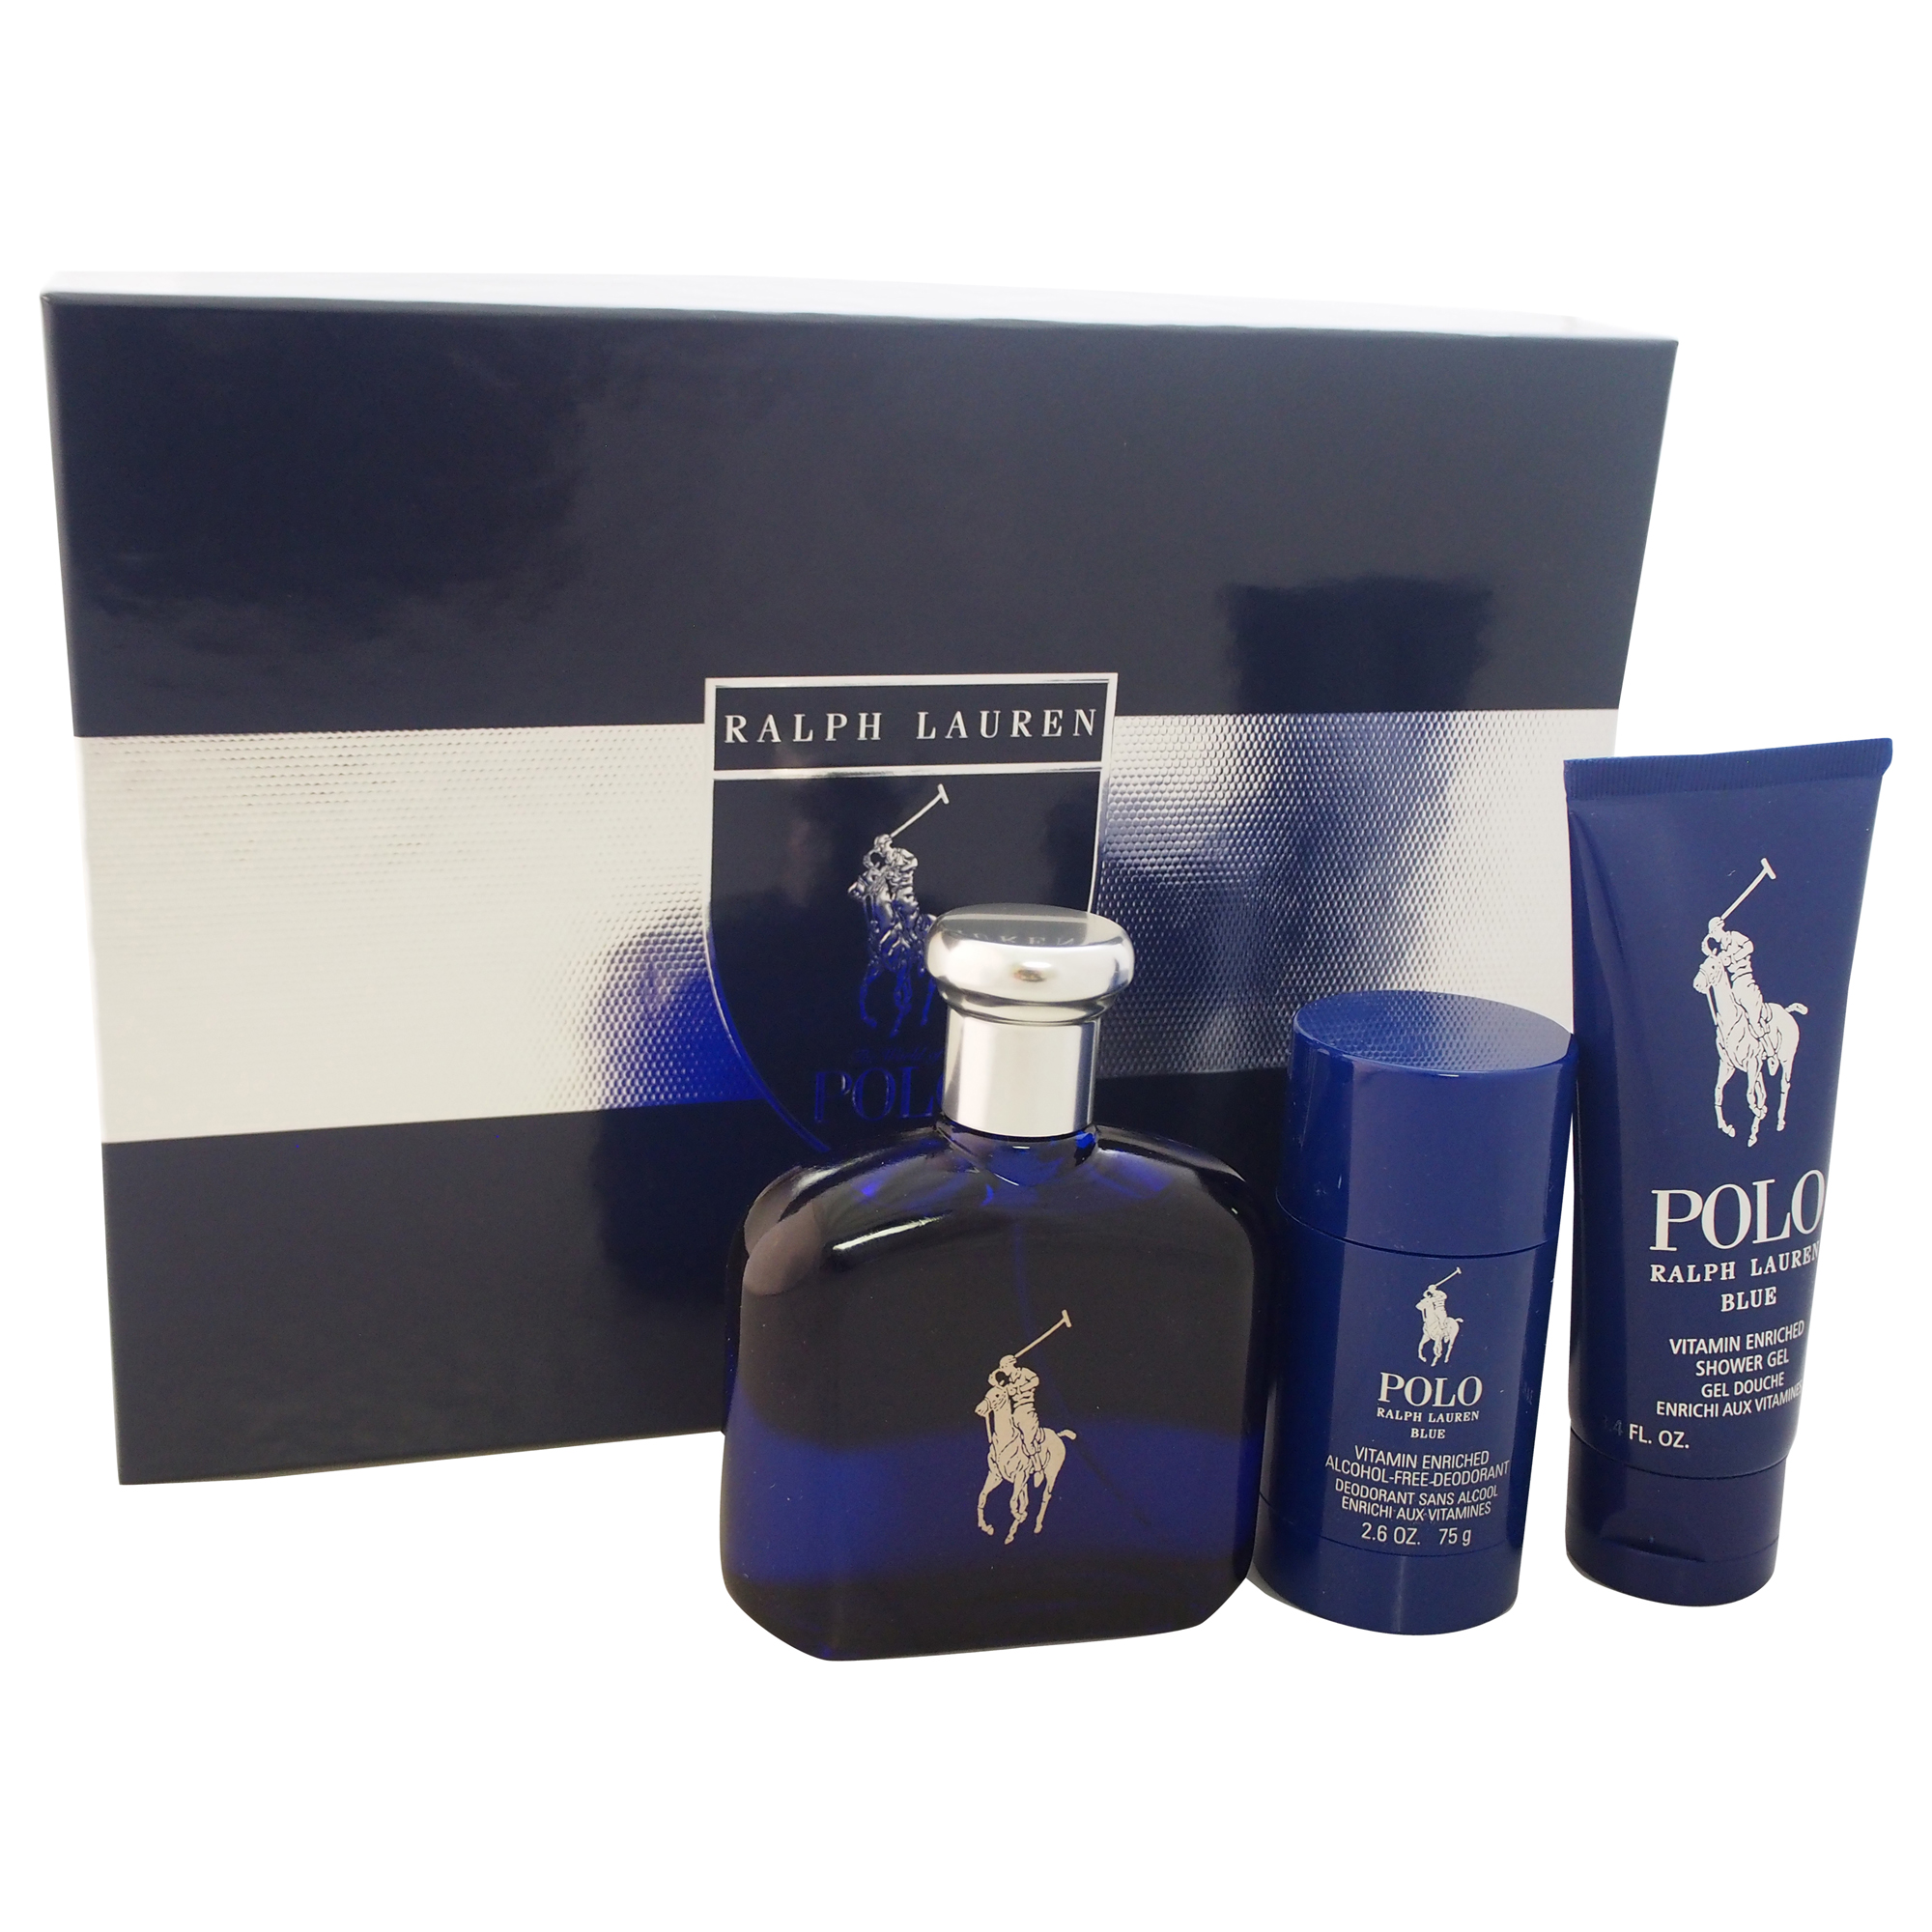 Polo Blue by Ralph Lauren for Men - 3 Pc Gift Set 4.2oz EDT Spray, 3